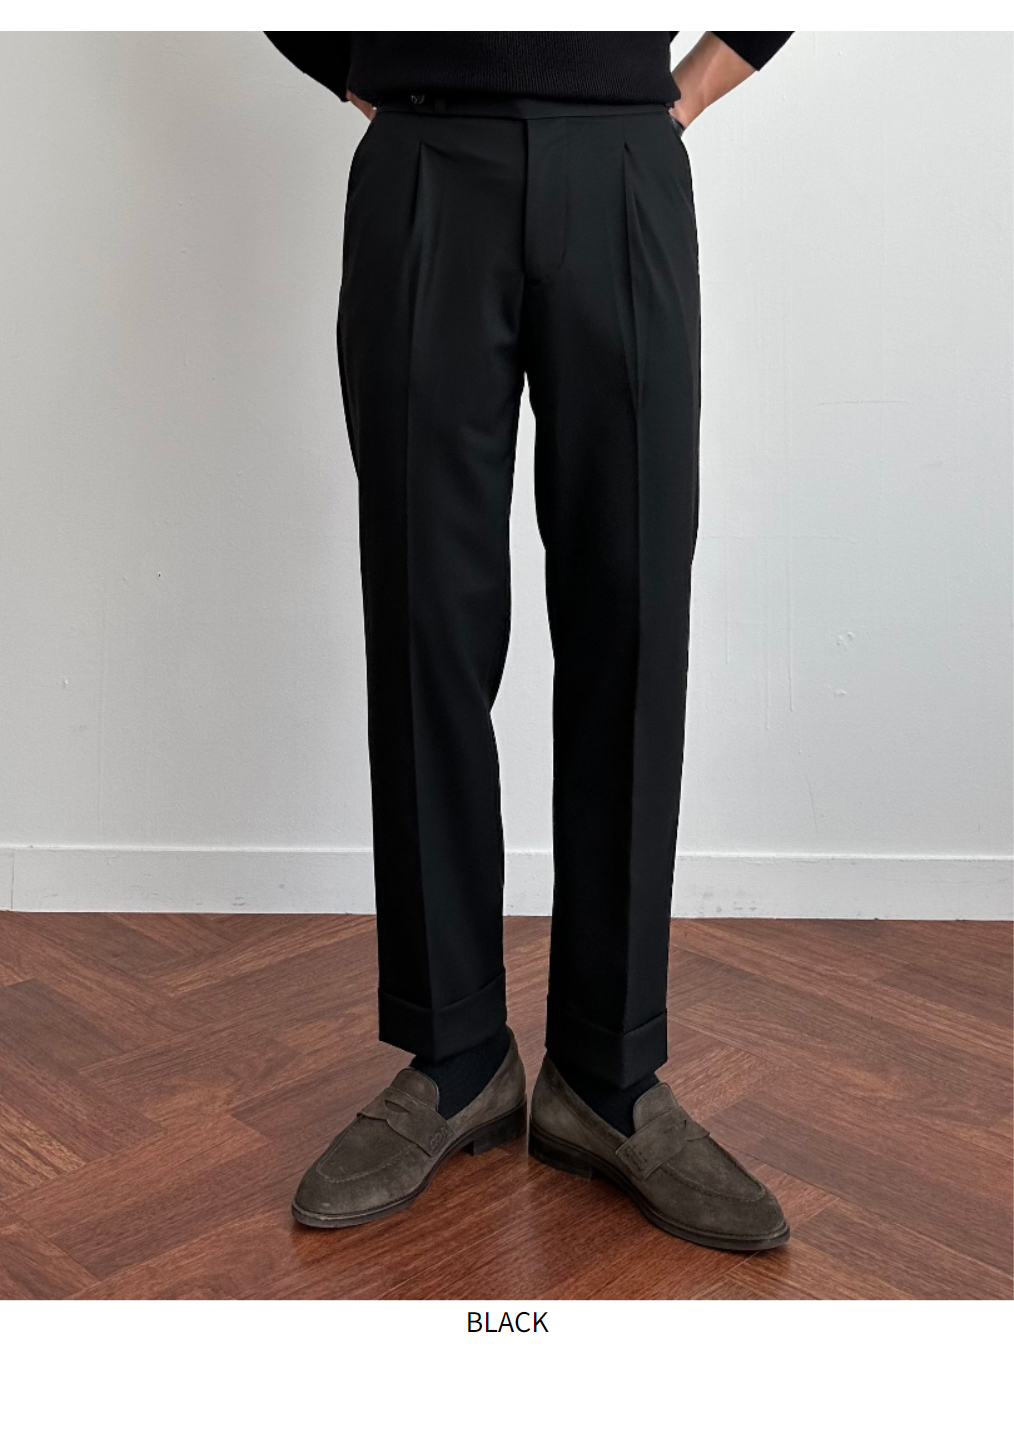 suspenders skirt/pants grey color image-S21L11